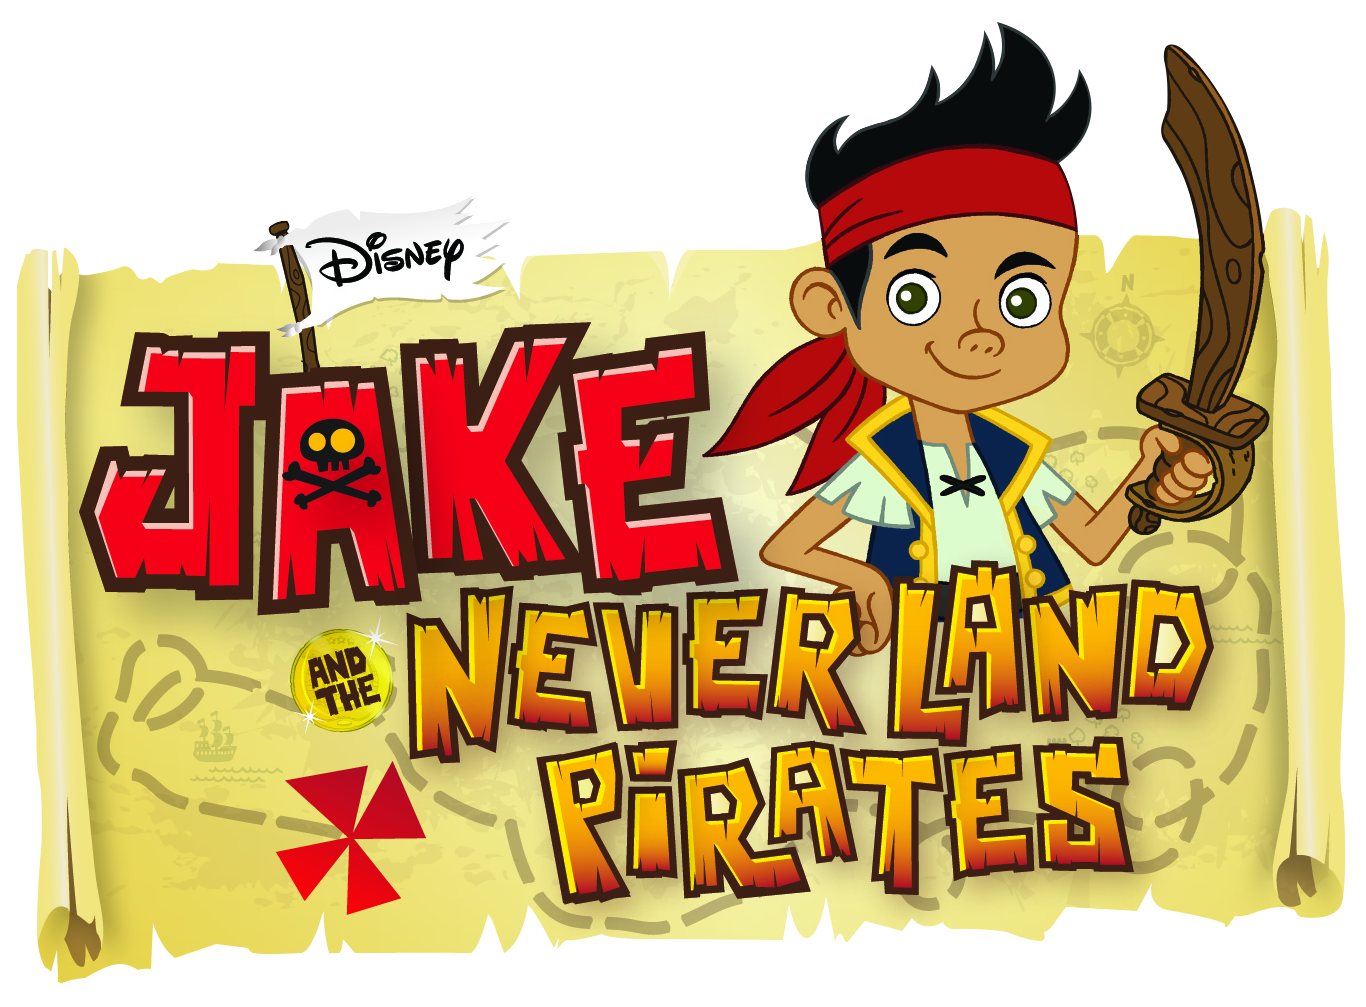 Jake and the neverland pirates logo